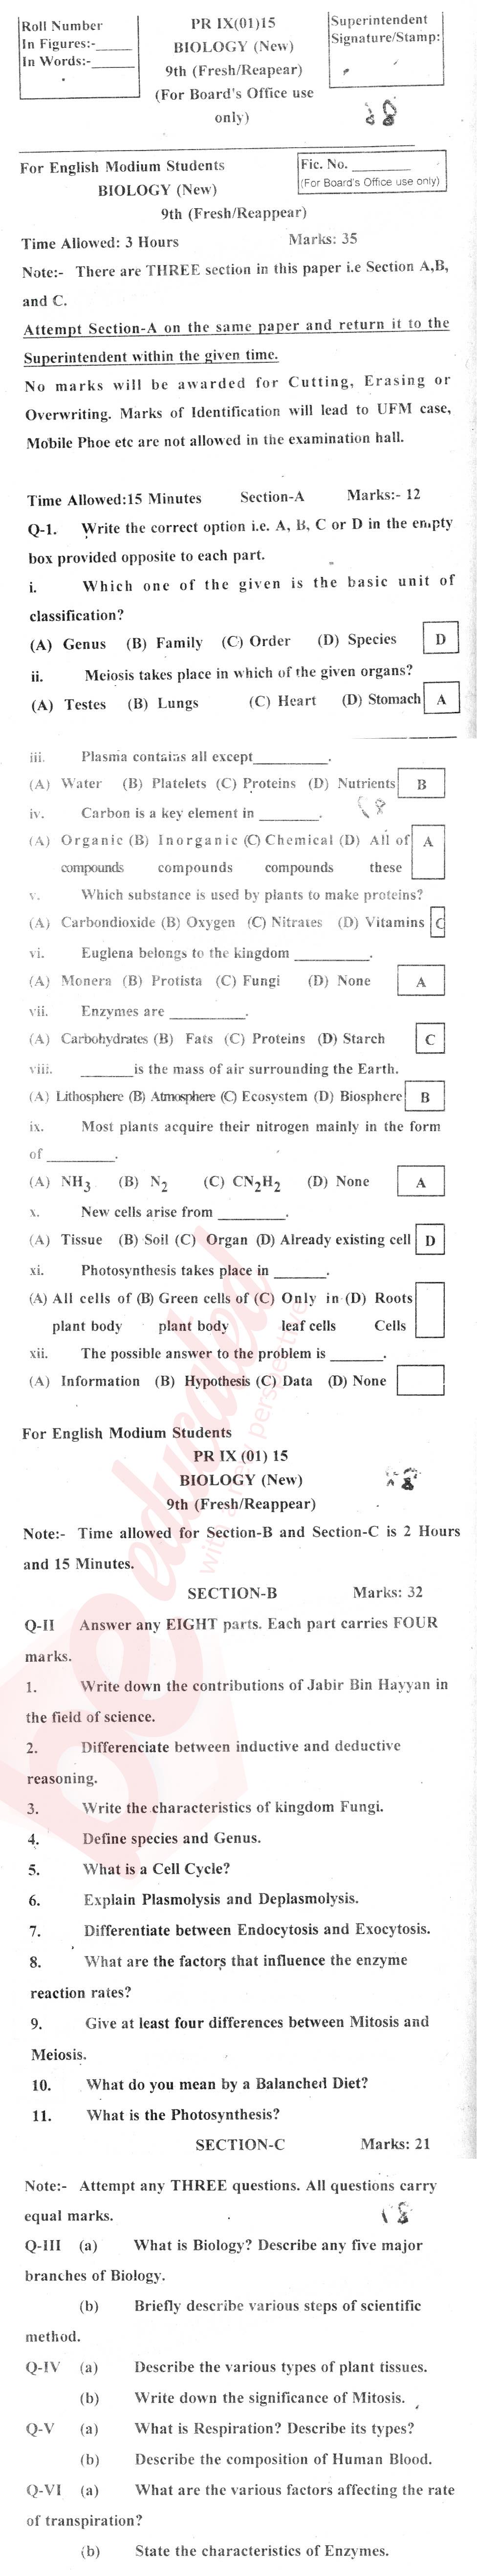 Biology 9th English Medium Past Paper Group 1 BISE DI Khan 2015